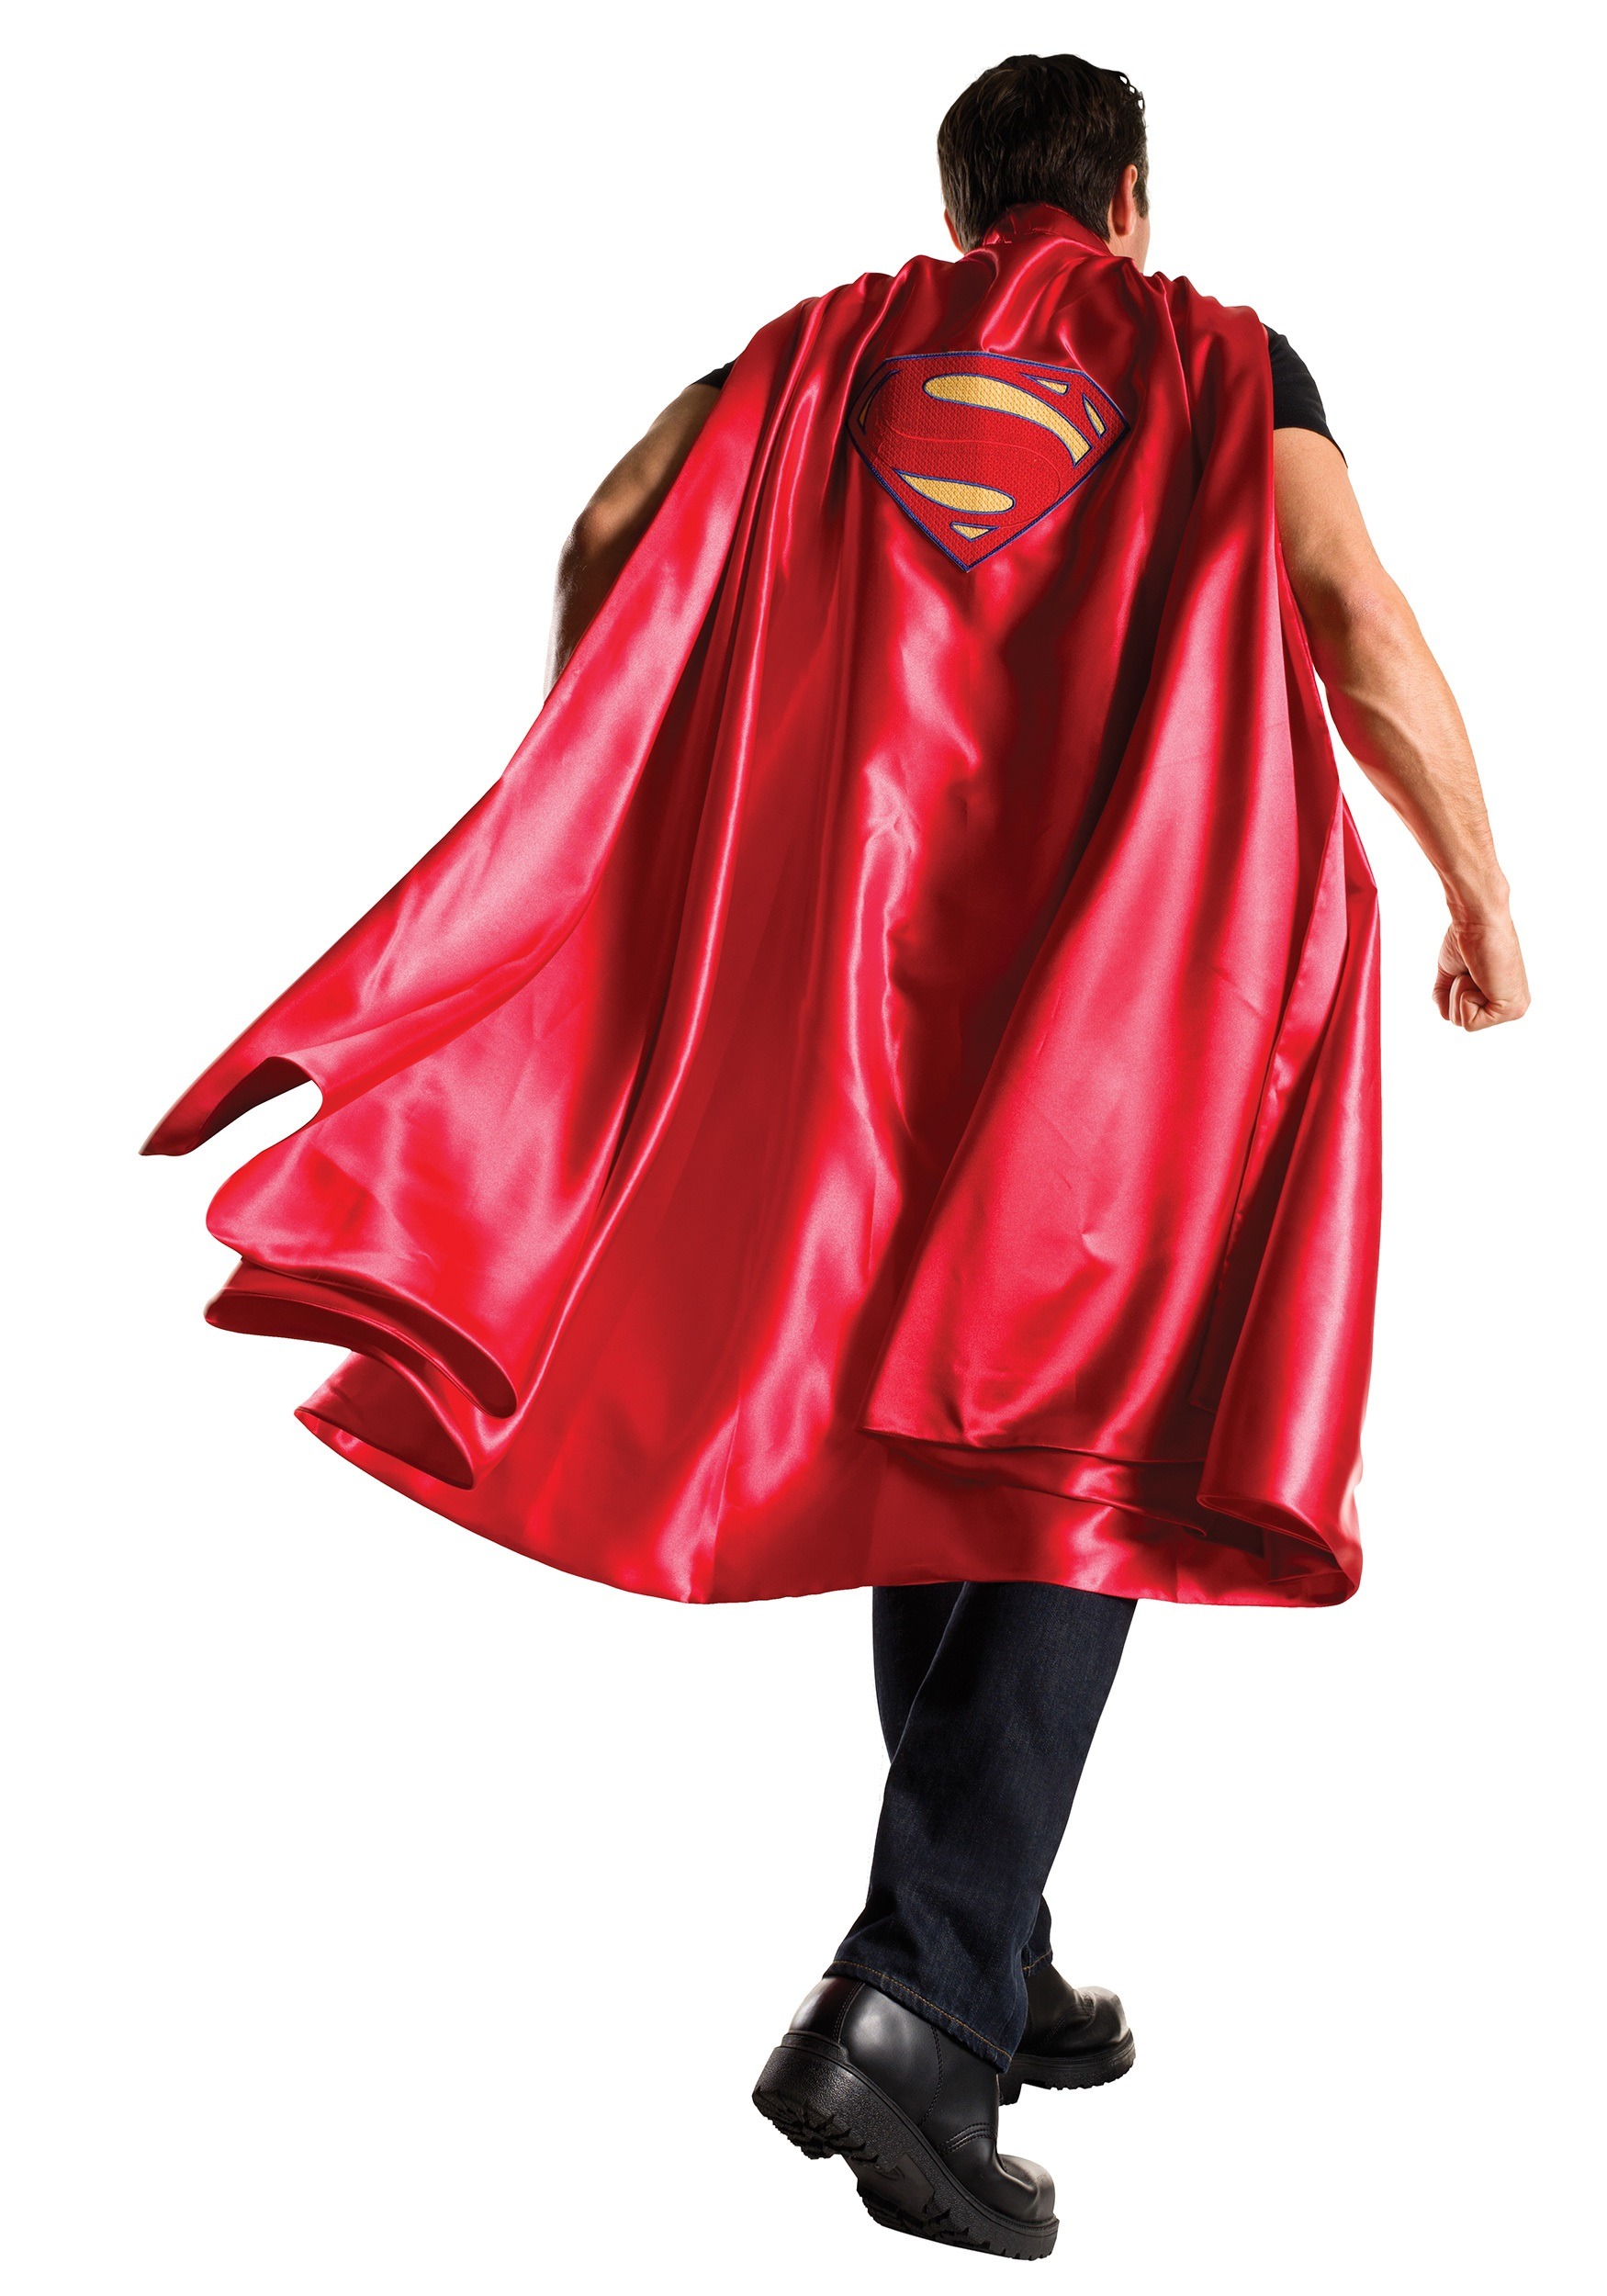 superman cape png